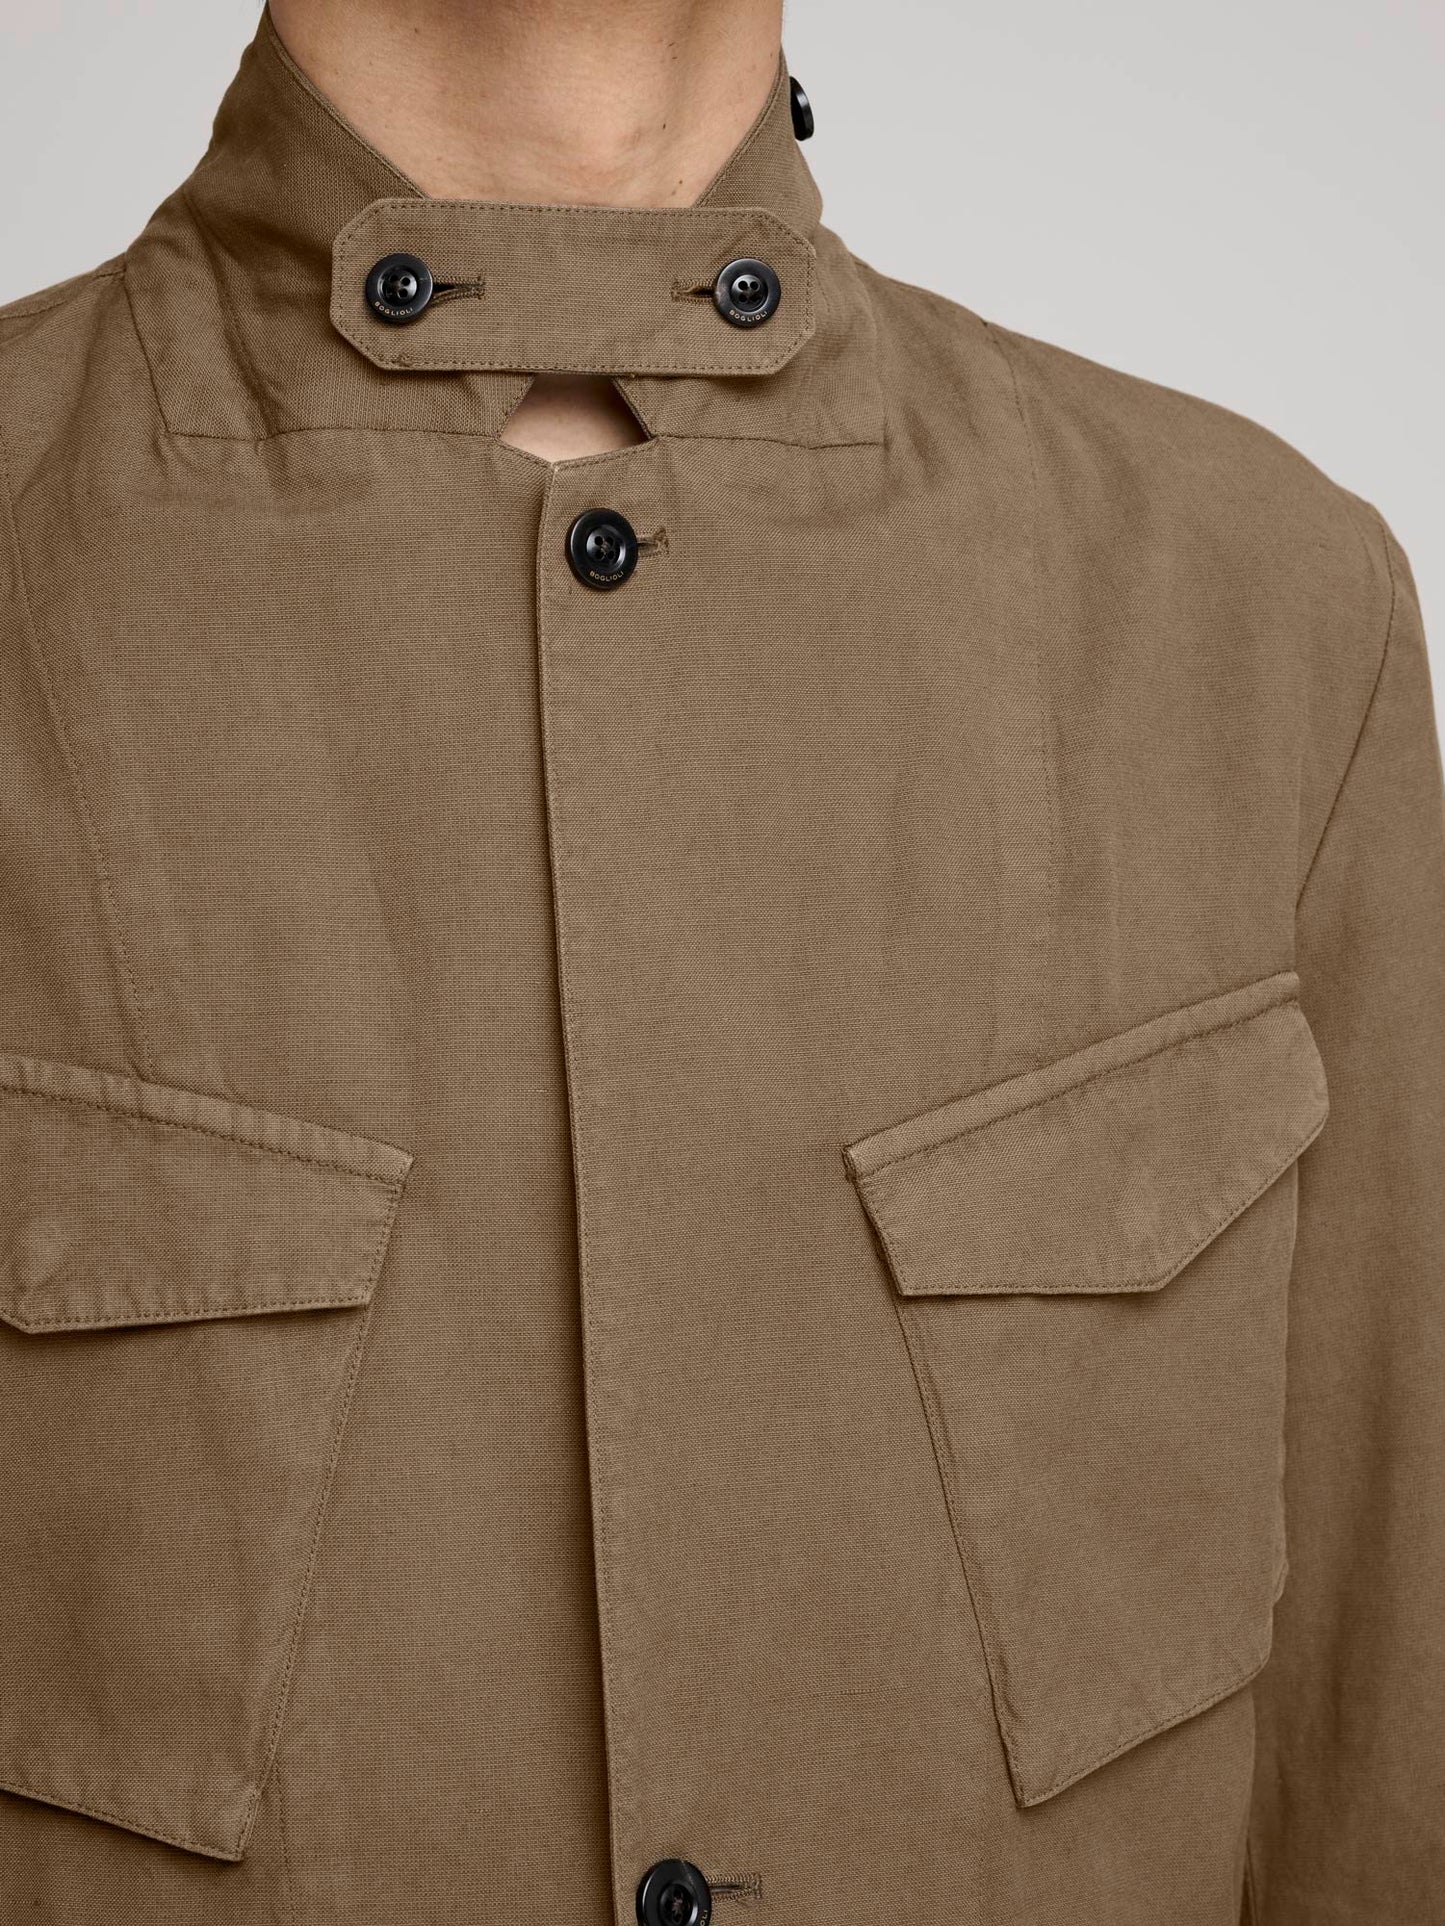 Safari Jacket Cotton & Linen, Brown